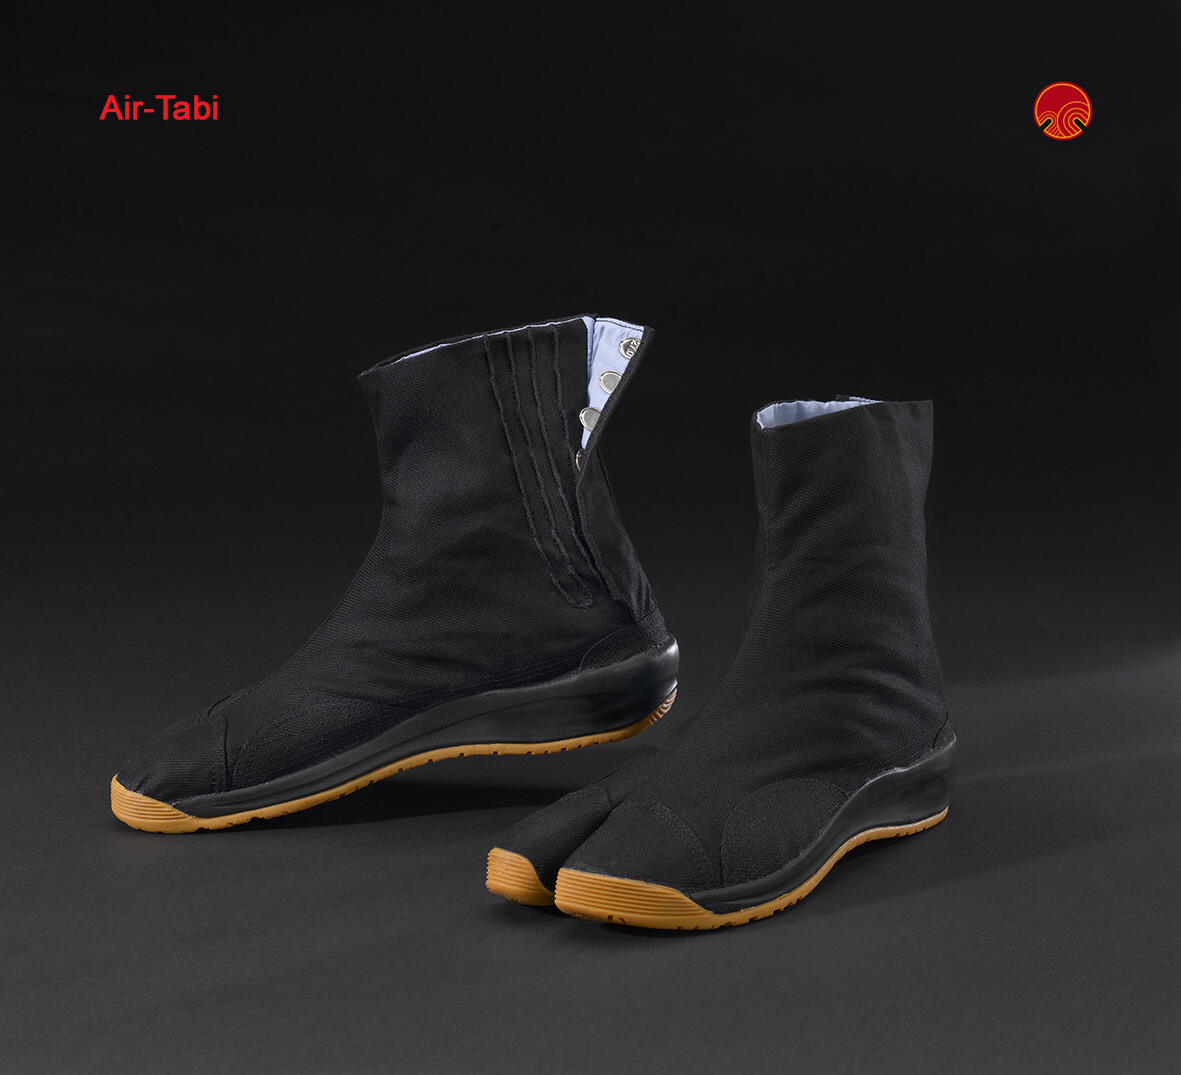 Japanese Matsuri Air Tabi-Shoes in black (66€)